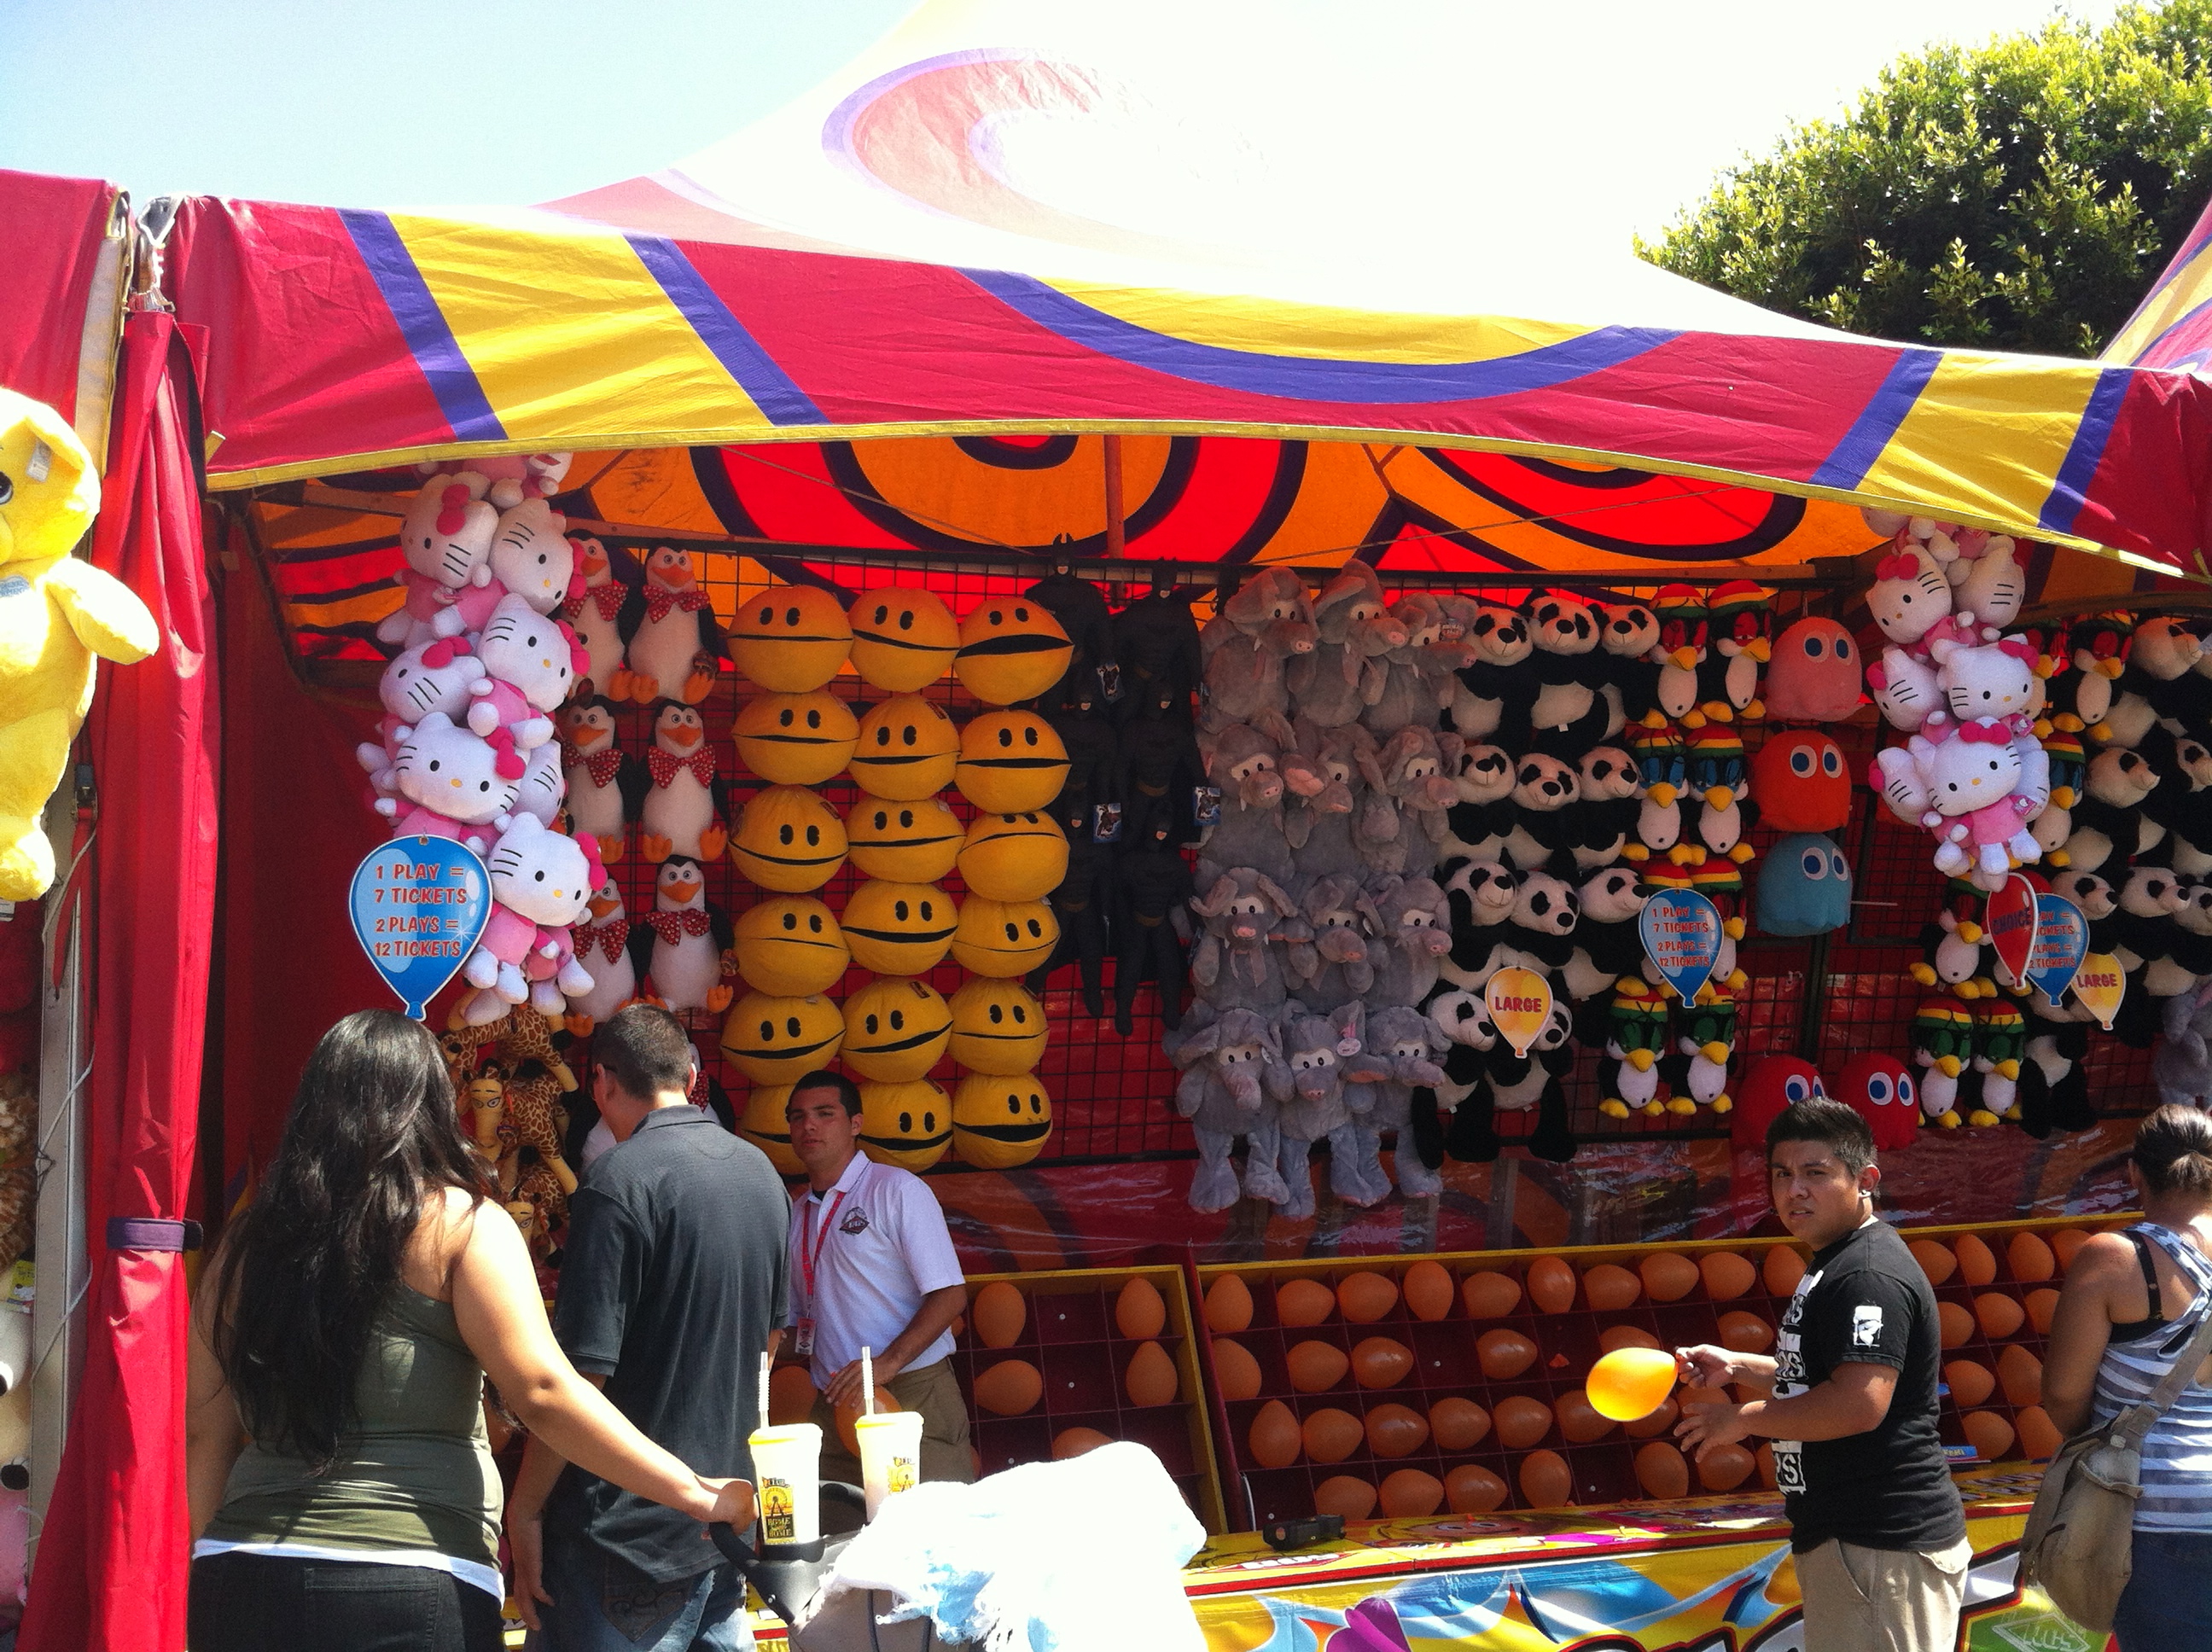 THE OC Fair - Orange County - Costa Mesa